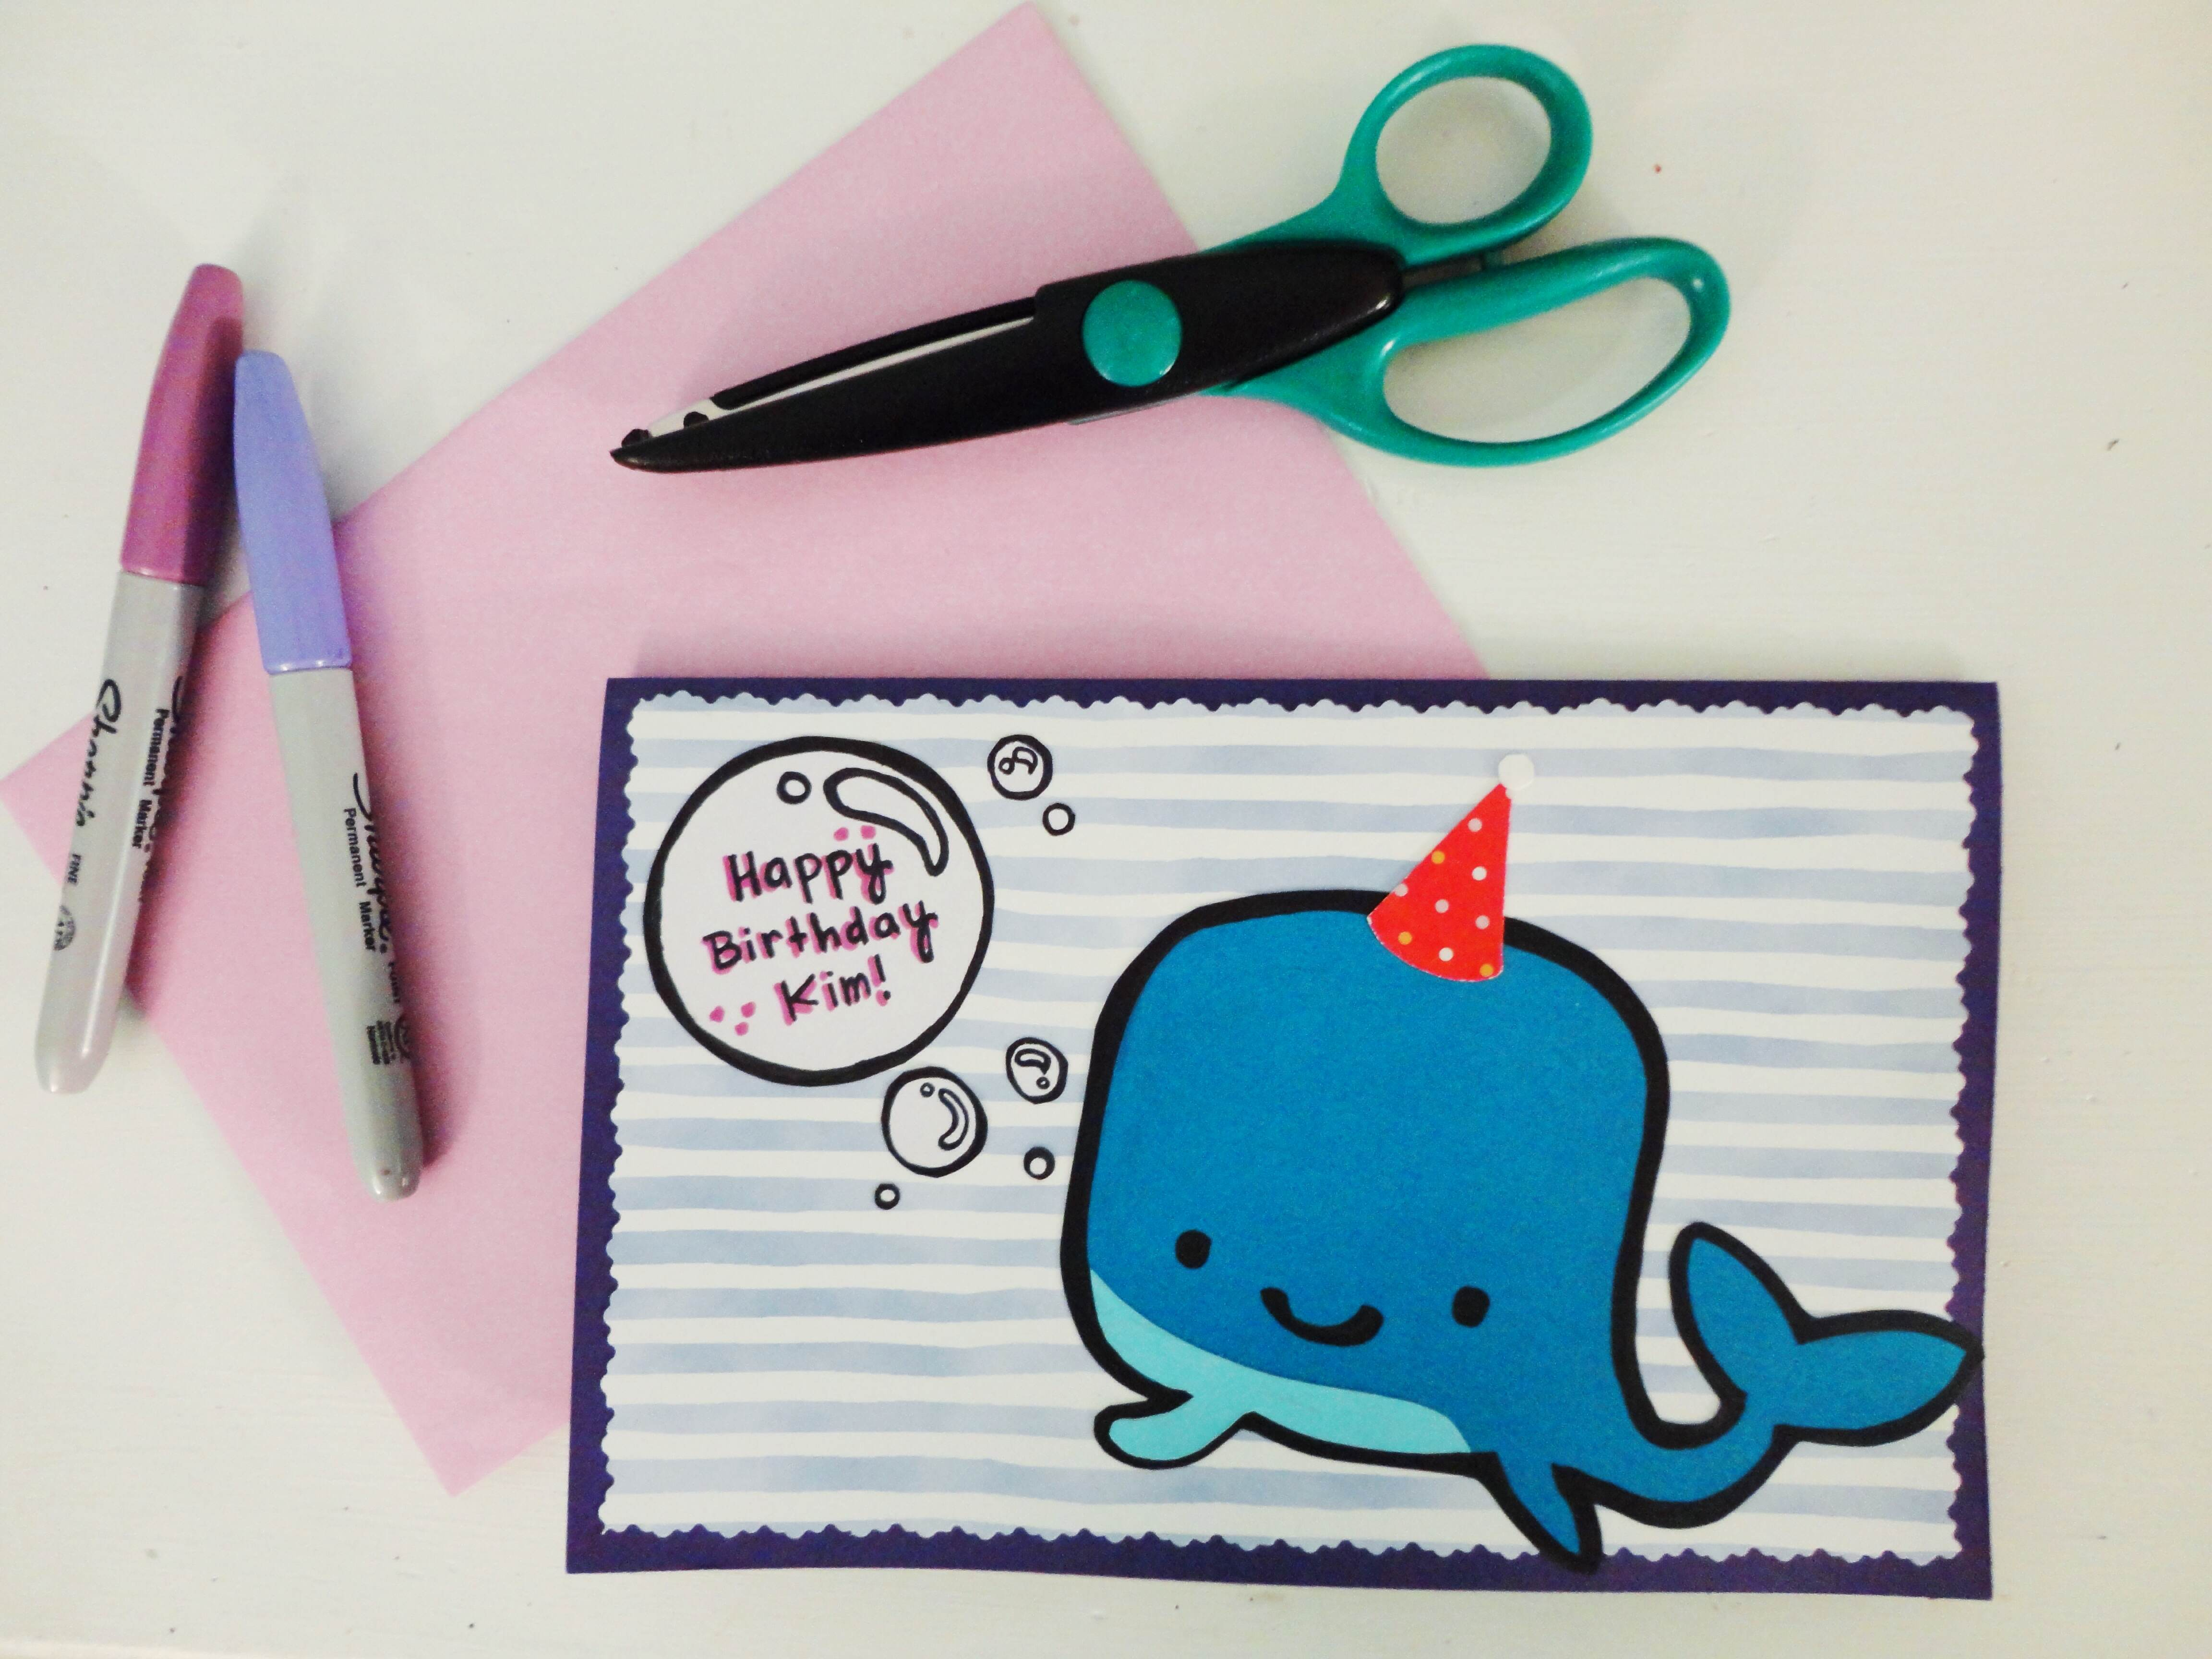 Handmade Birthday Cards Ideas For Friends Inconvenient Friendships And A Birthday Card Diy The Diy Chacaruna